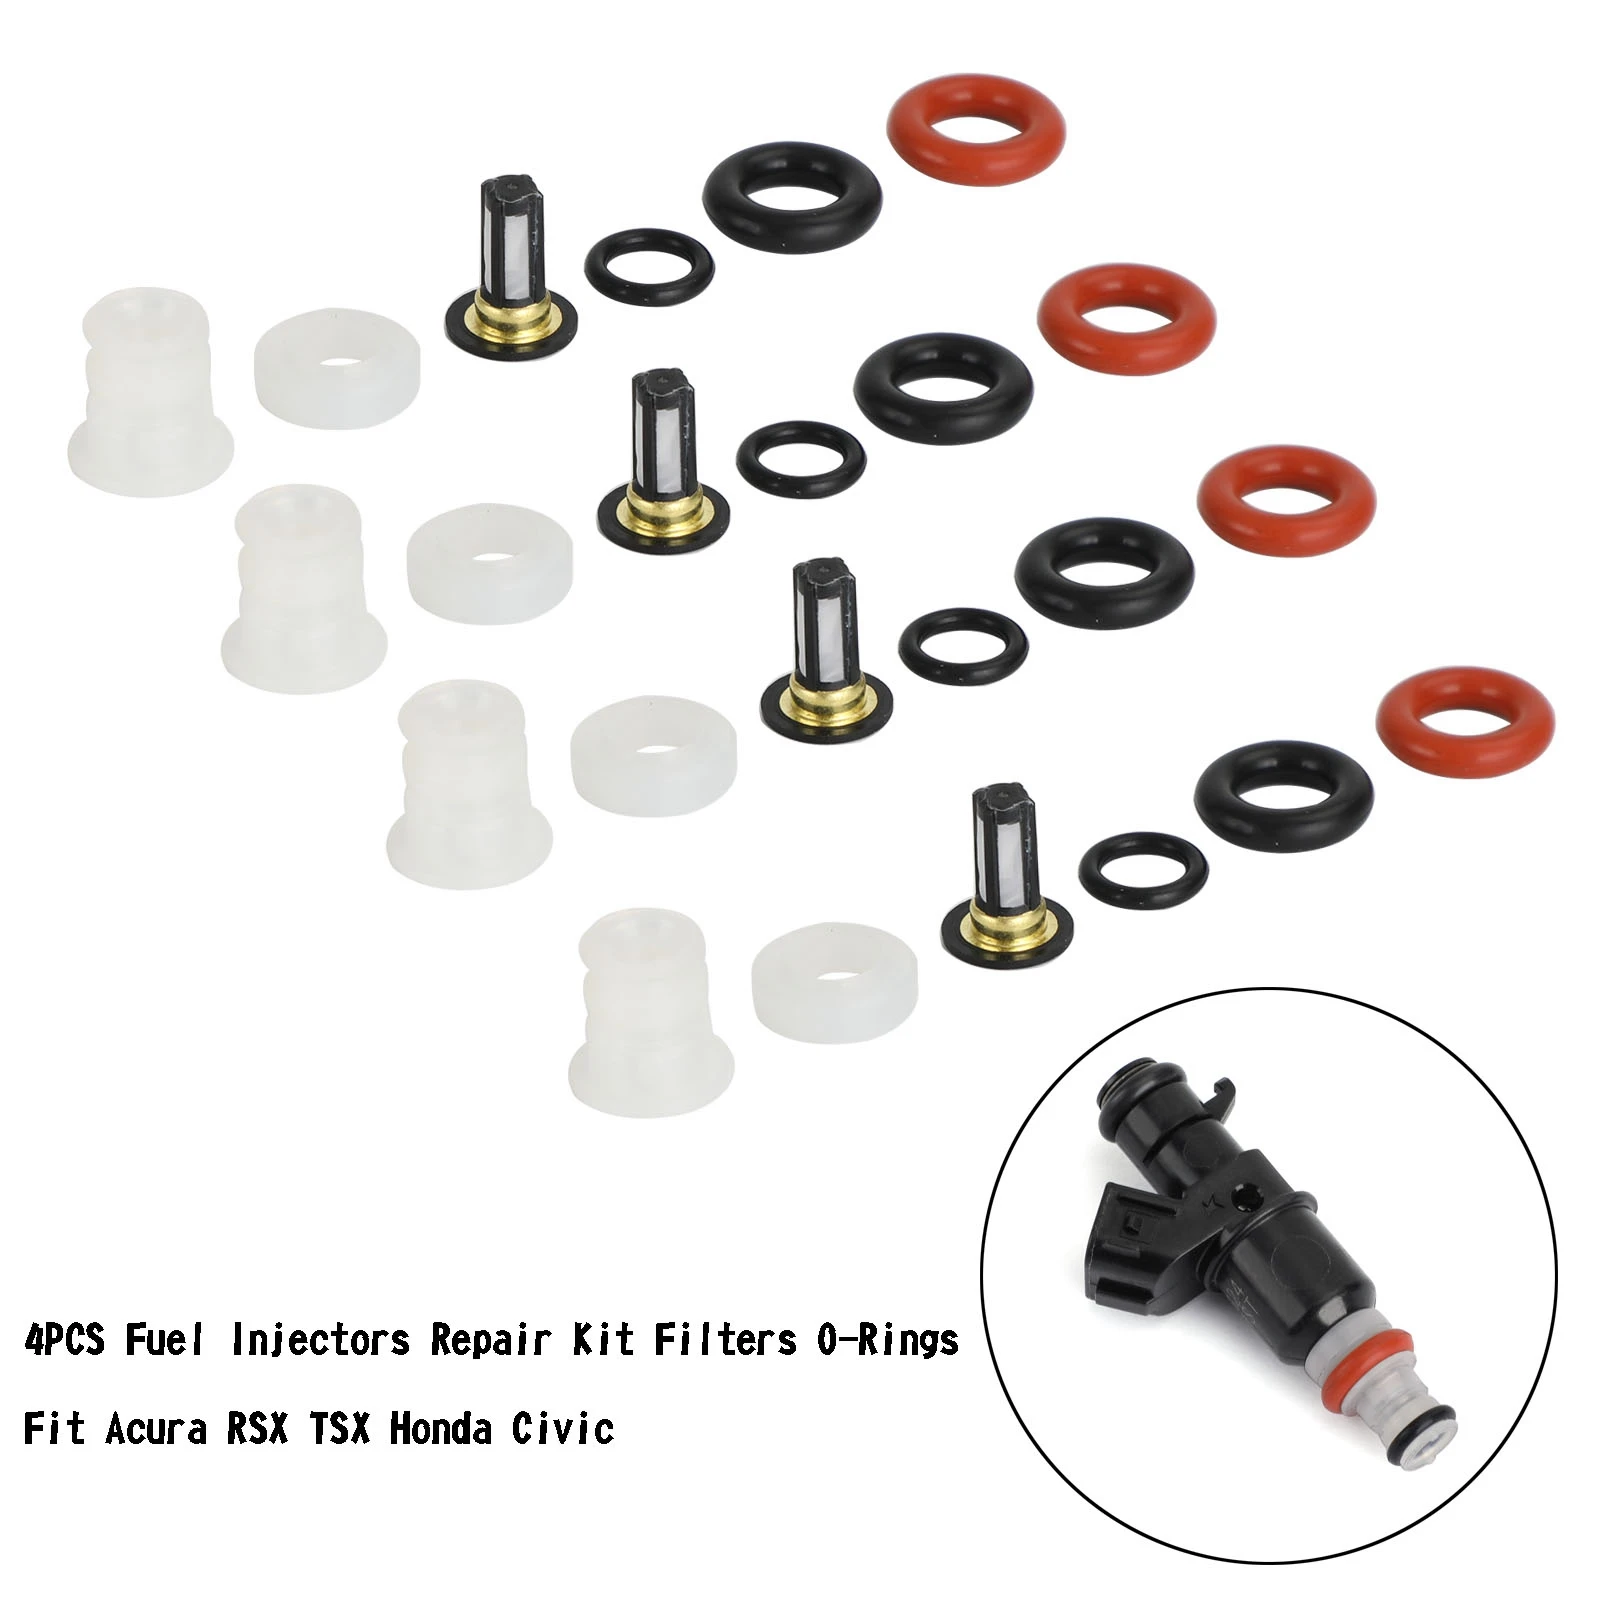 Artudatech 4PCS Fuel Injectors Repair Kit Filters O-Rings Fit Acura RSX TSX Honda Civic Car Accessories